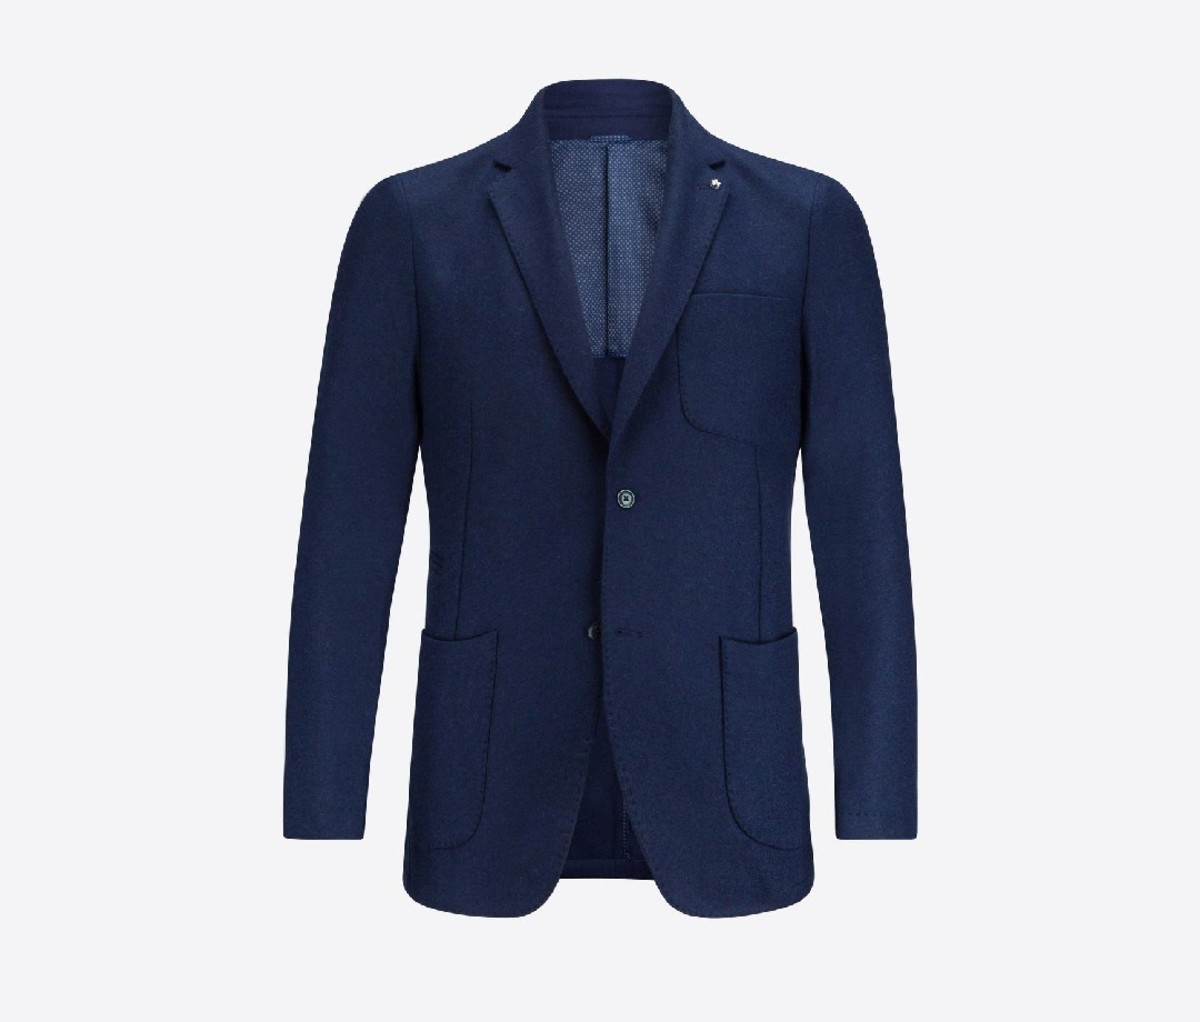 A blue Bugatchi blazer